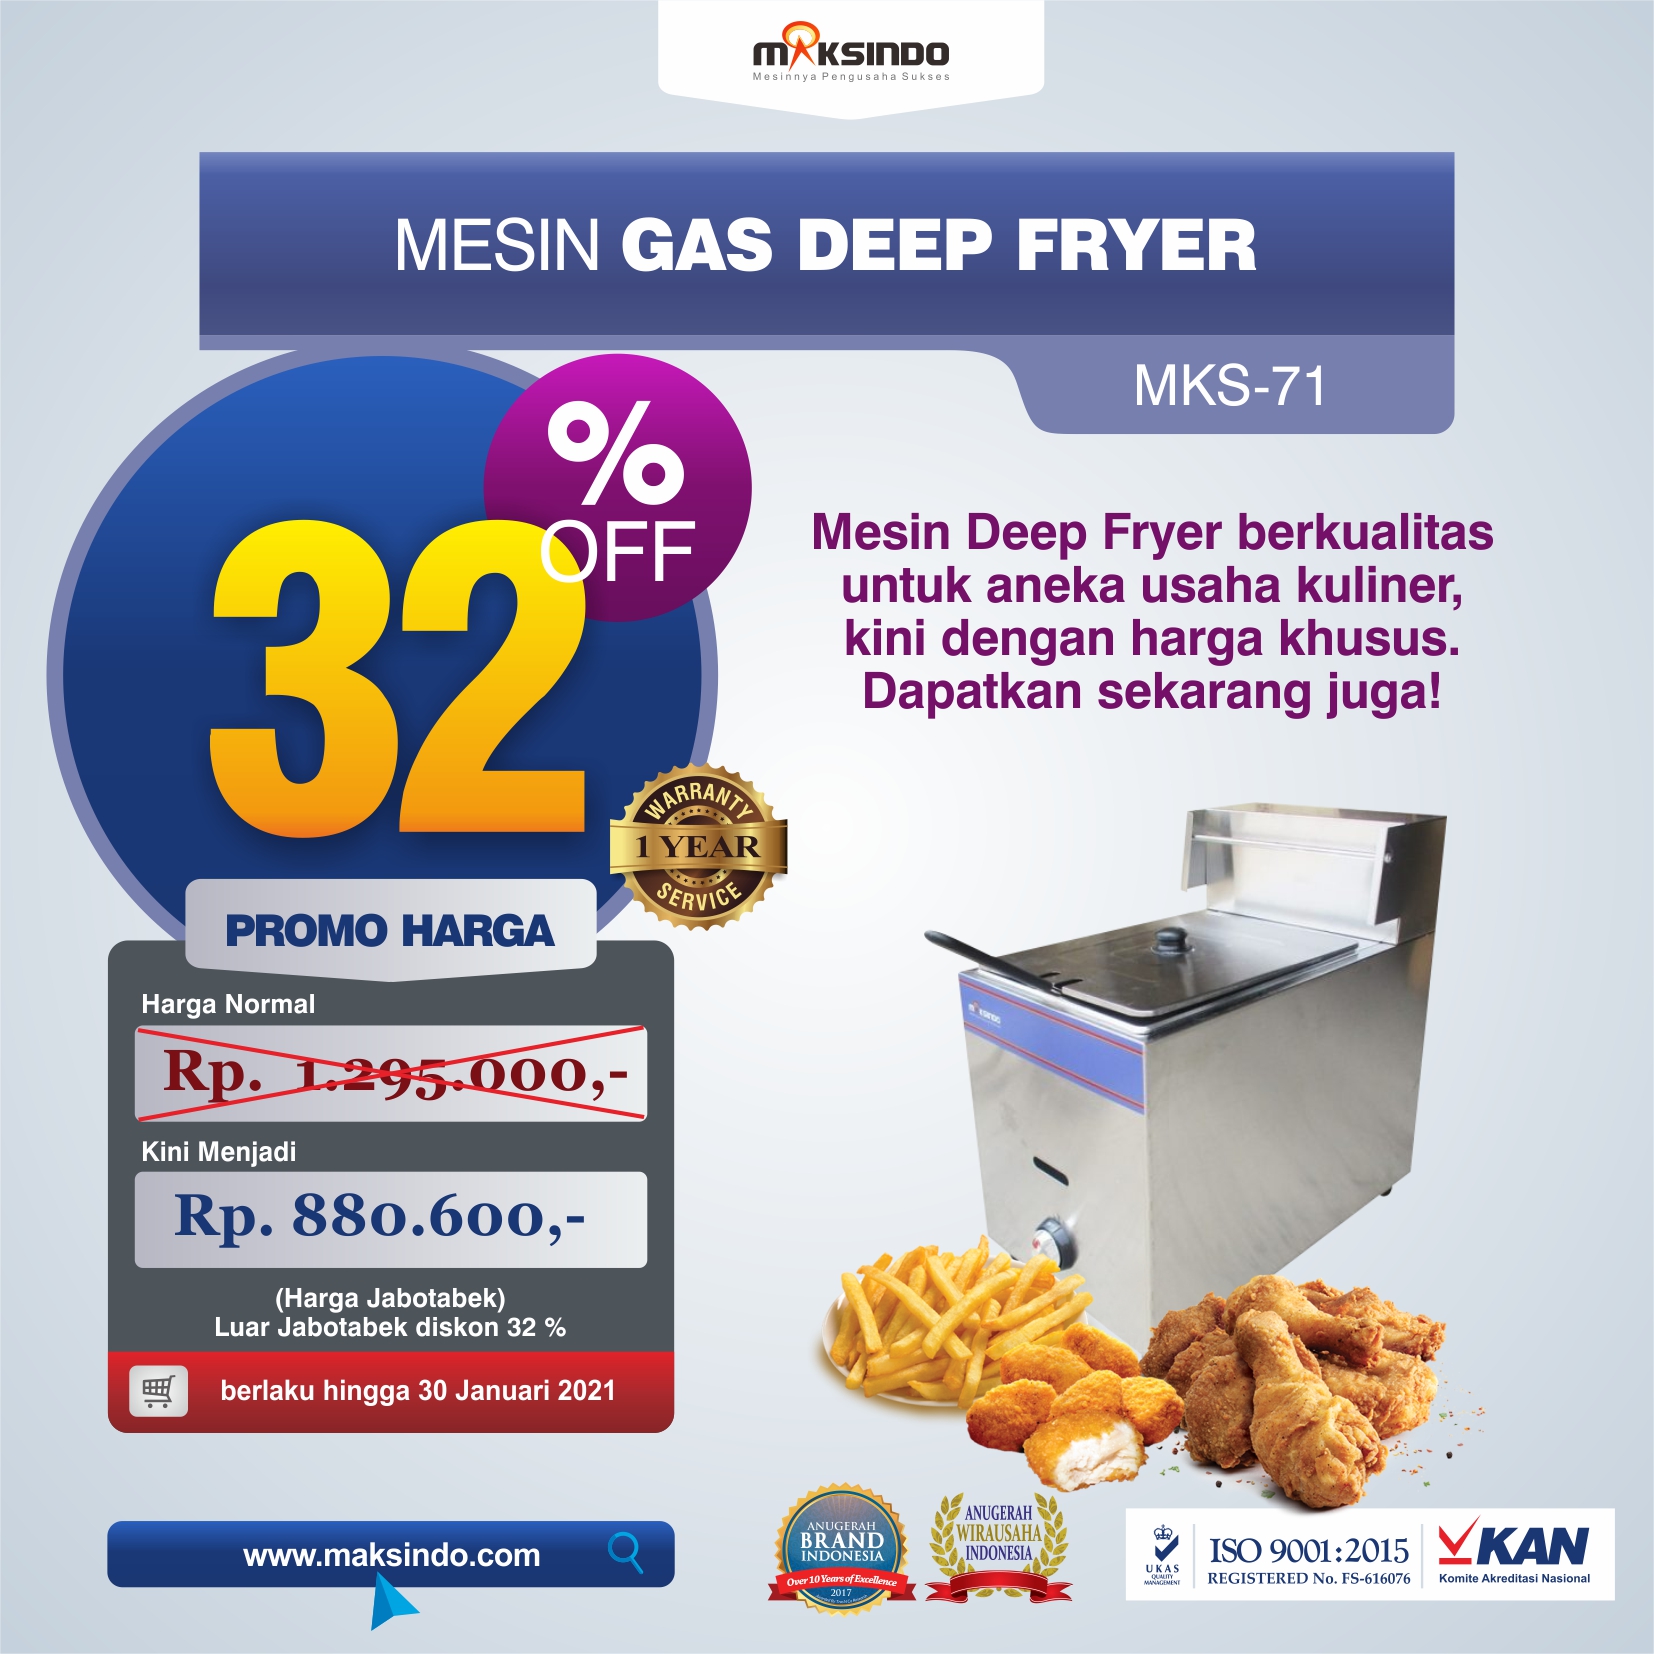 Mesin Gas Deep Fryer MKS-71